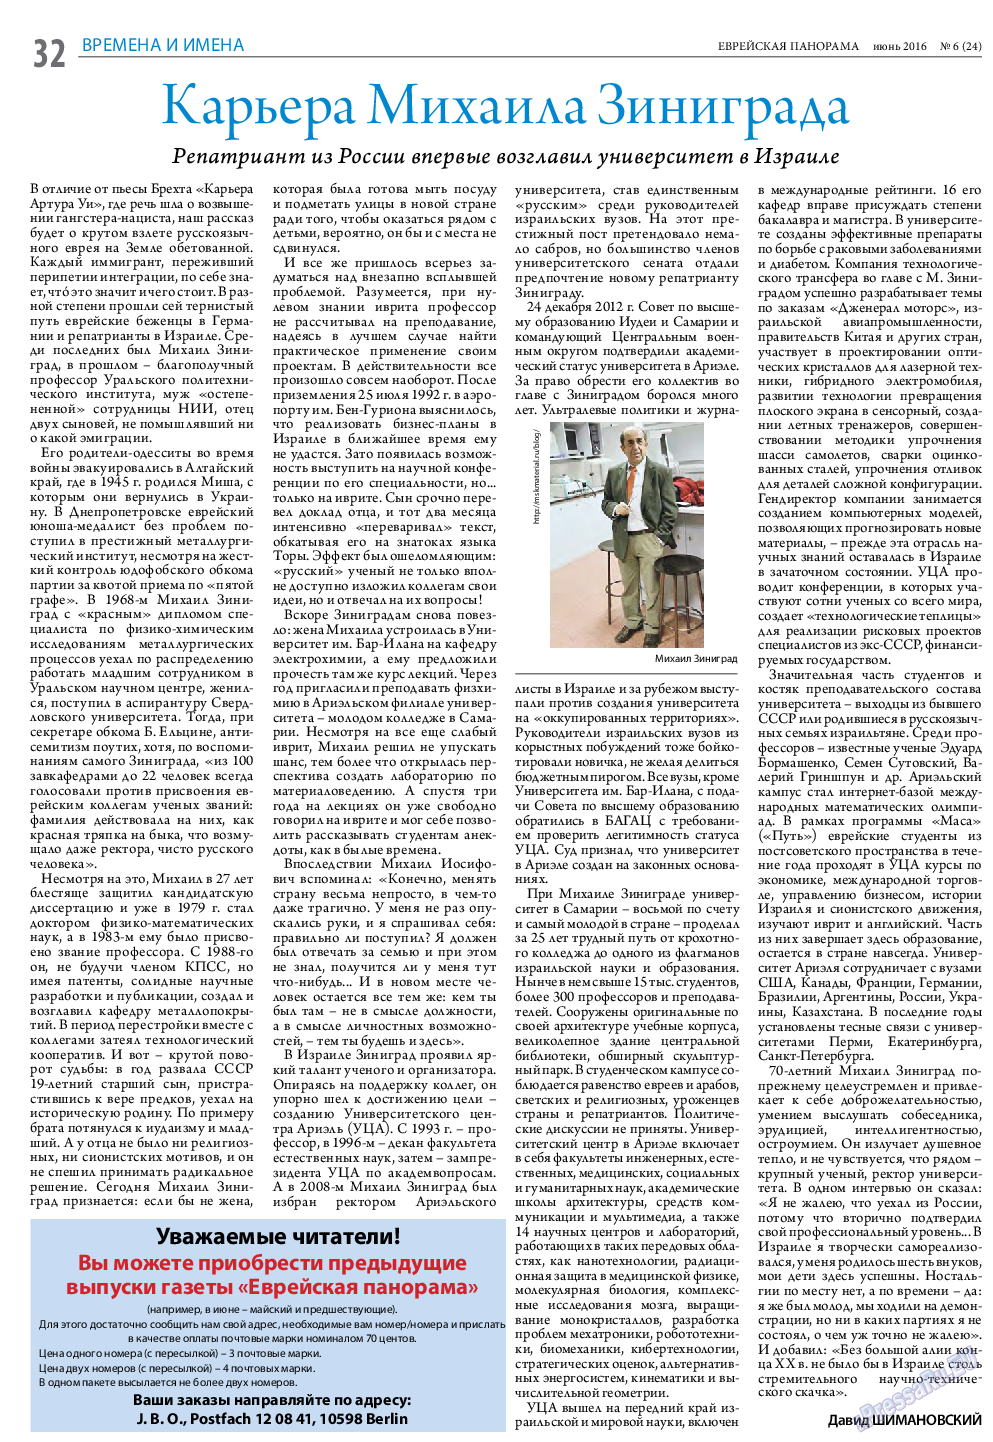 Еврейская панорама, газета. 2016 №6 стр.32